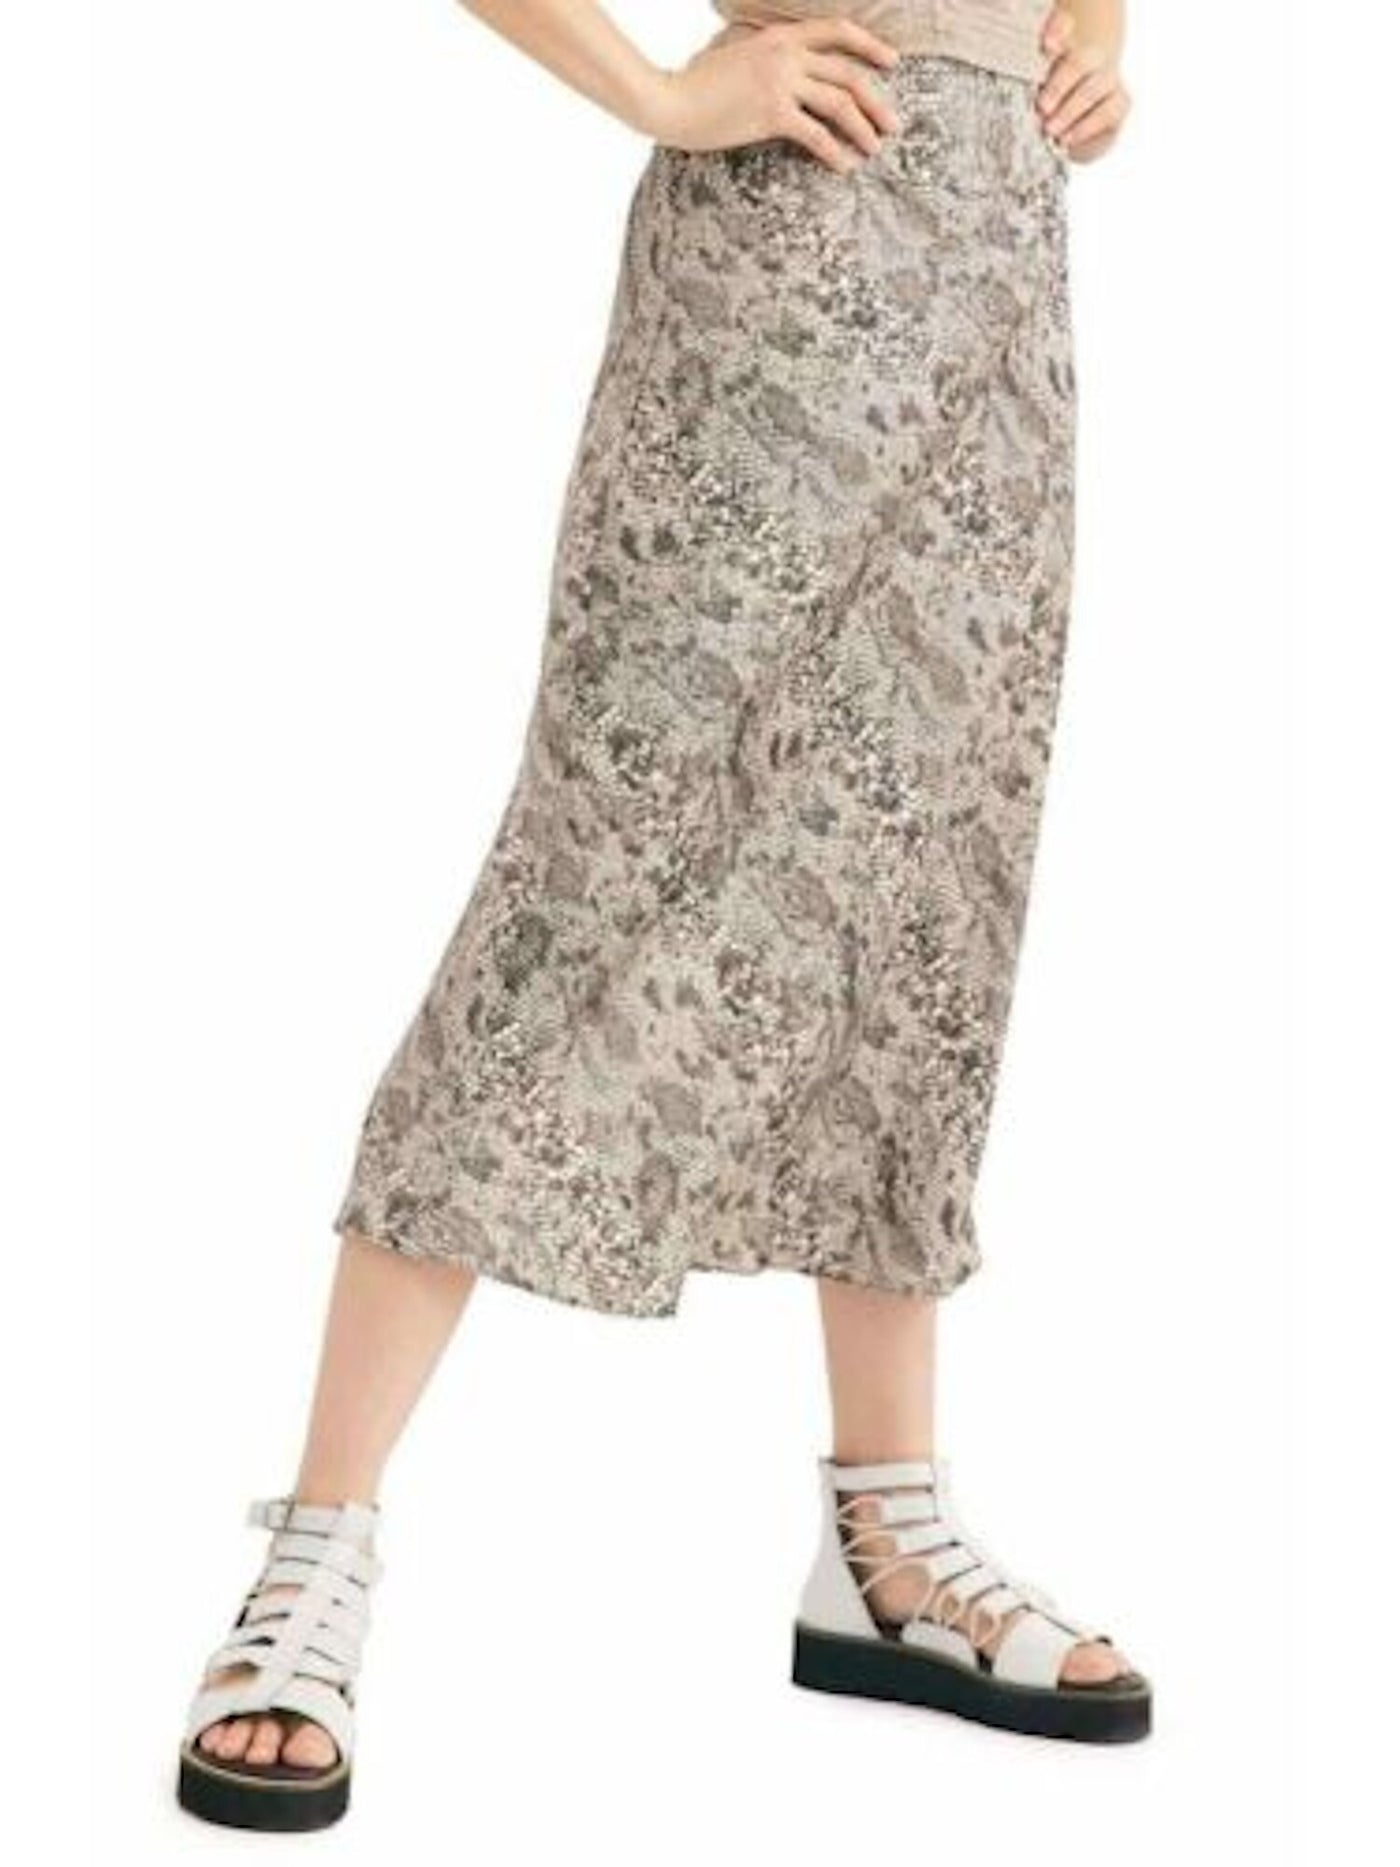 FREE PEOPLE Womens Gray Printed Tea-Length Pencil Skirt Size: 2